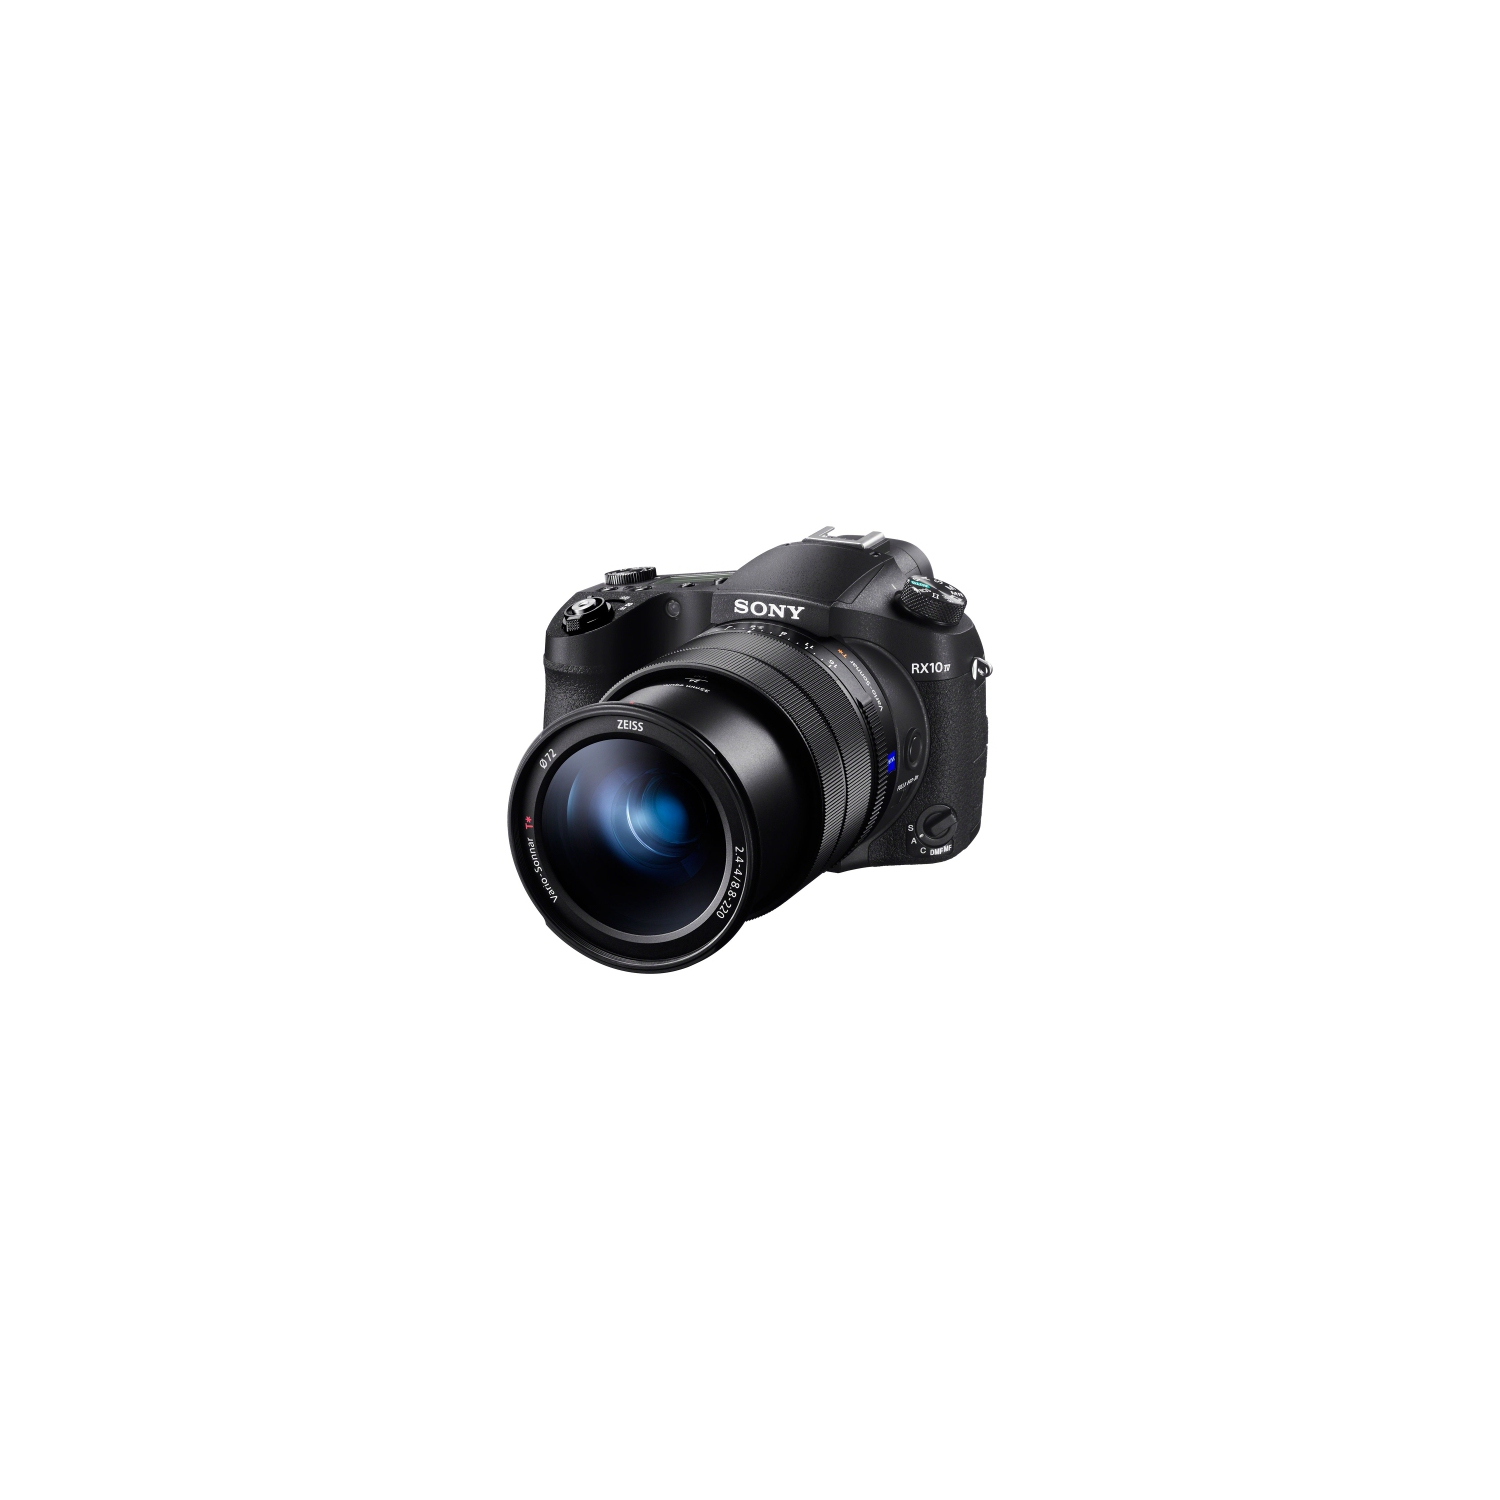 Sony Cyber-shot RX10 IV Wi-Fi 21MP 25x Optical Zoom Digital Camera - Black - Open Box